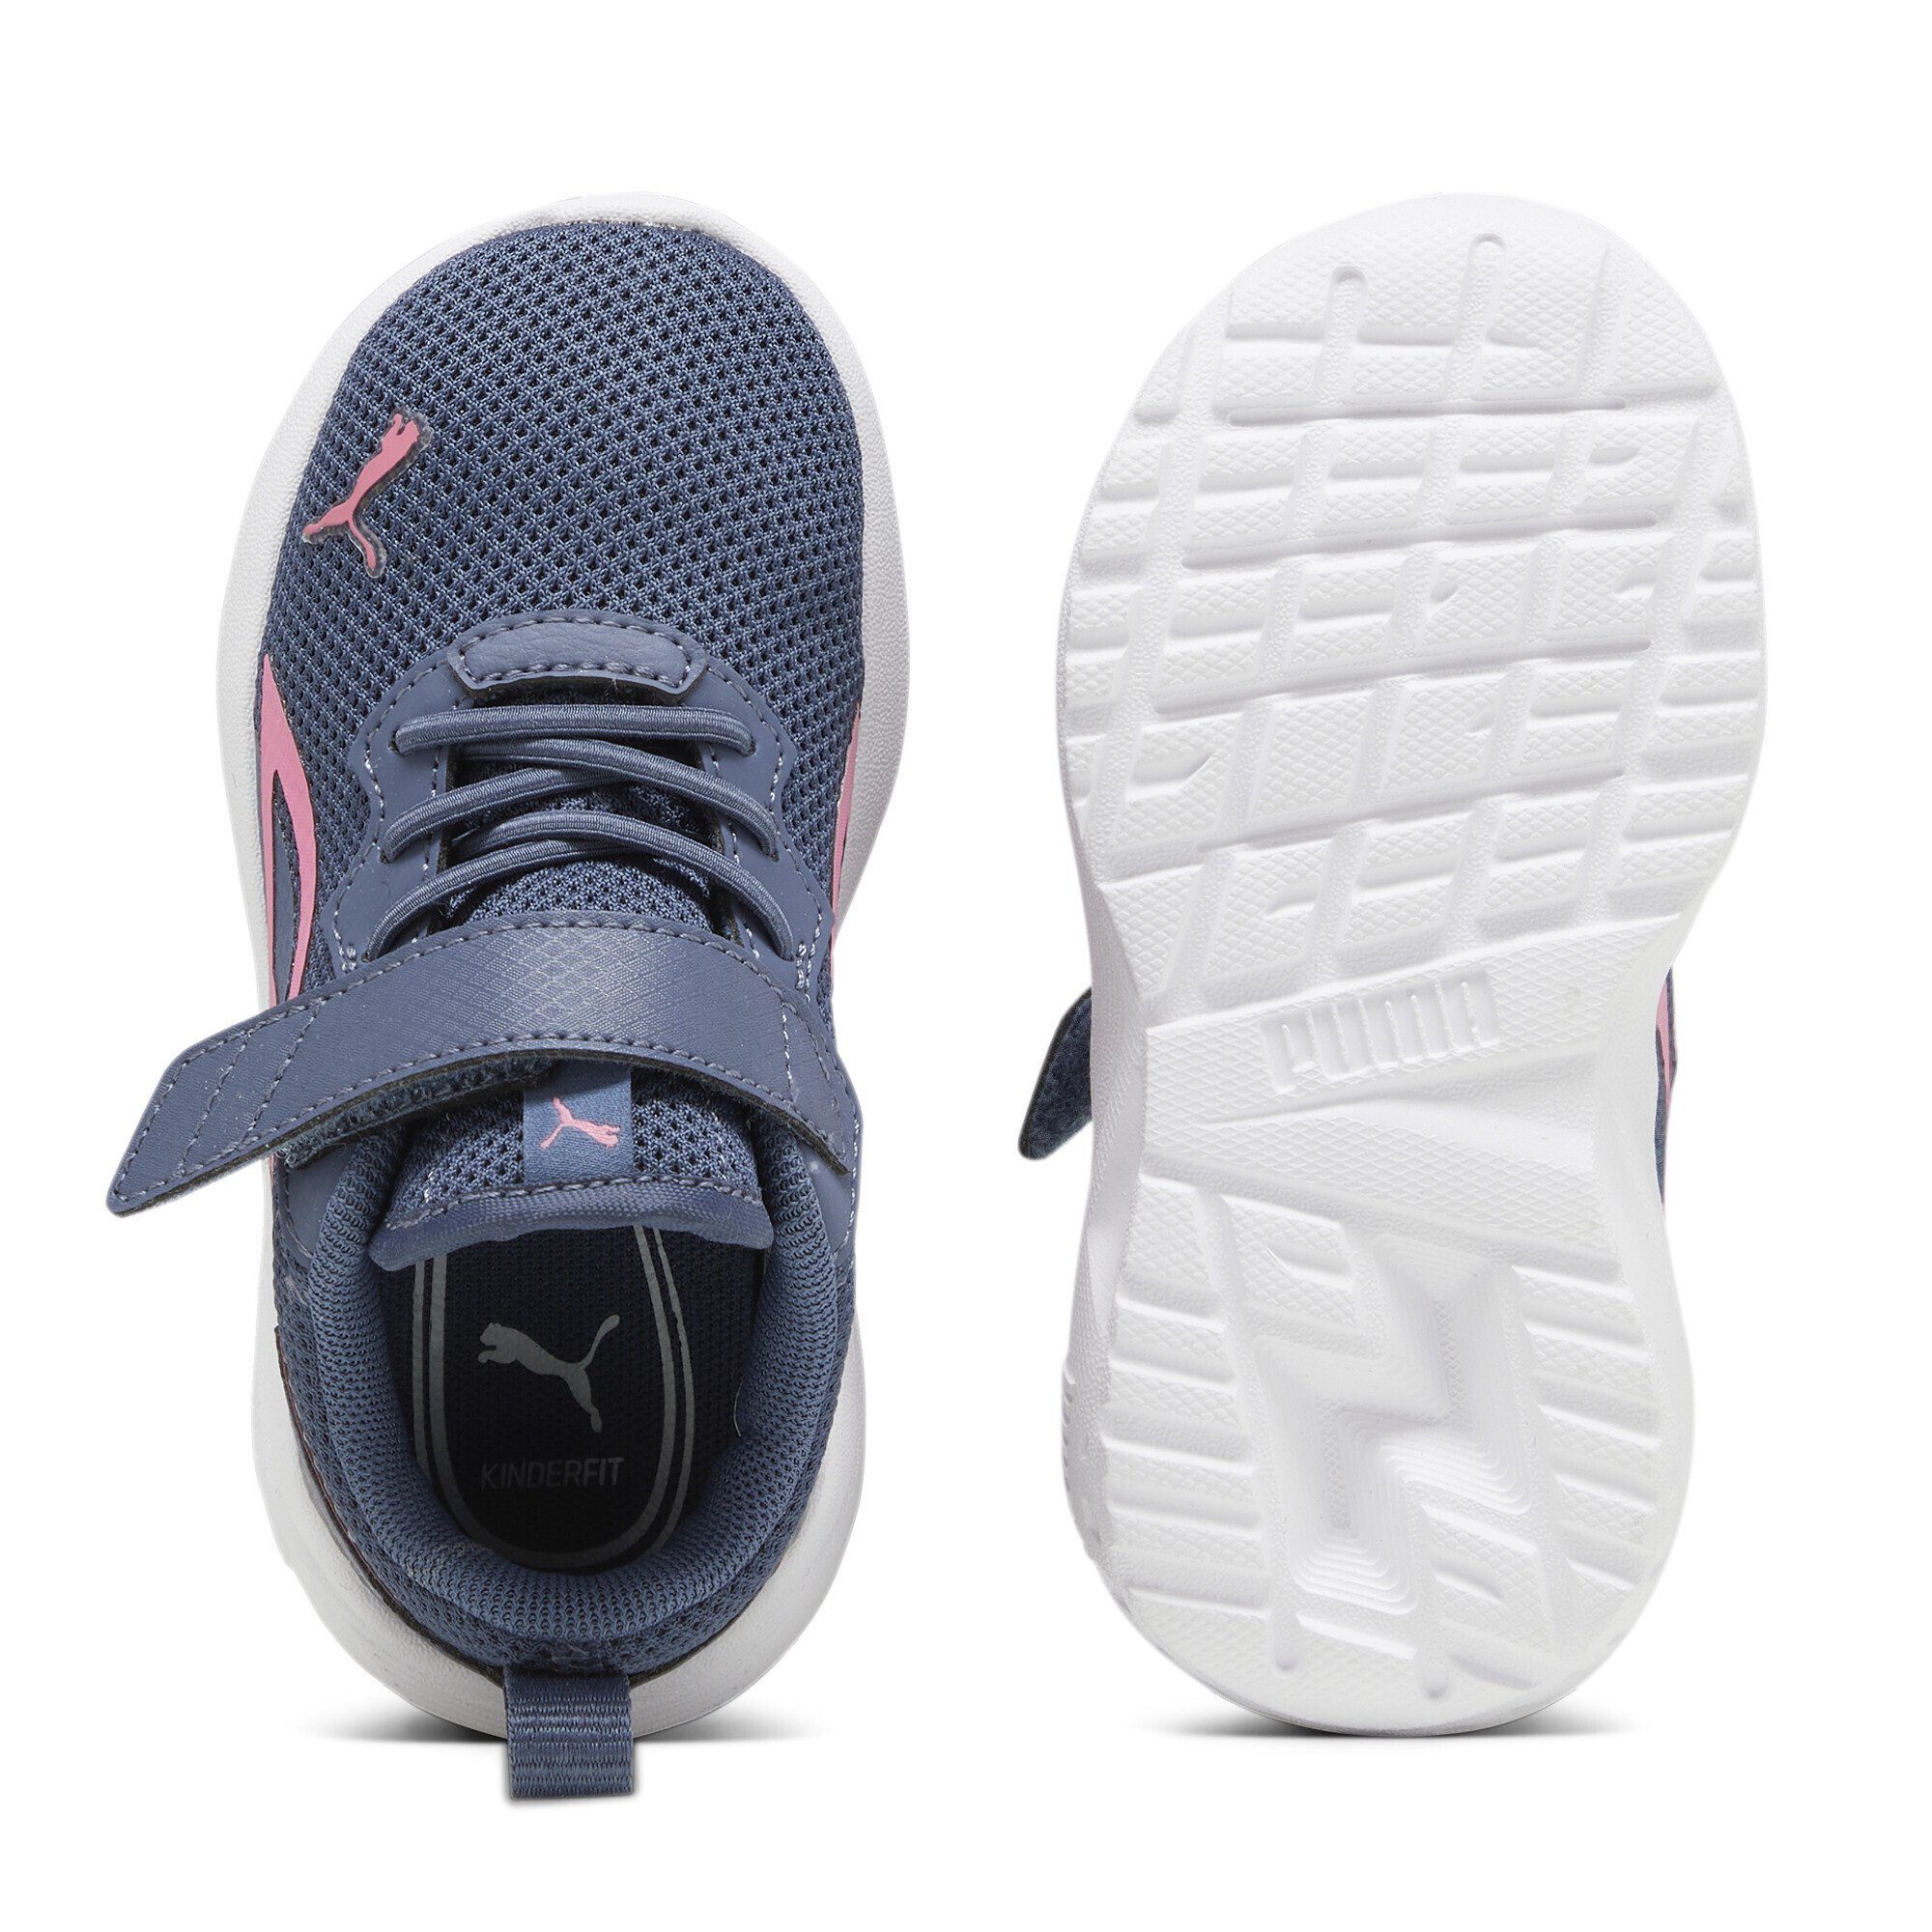 PUMA All-Day Verschluss alternativem mit Inky Strawberry Blue Kinder Sneakers Pink Active Sneaker Burst